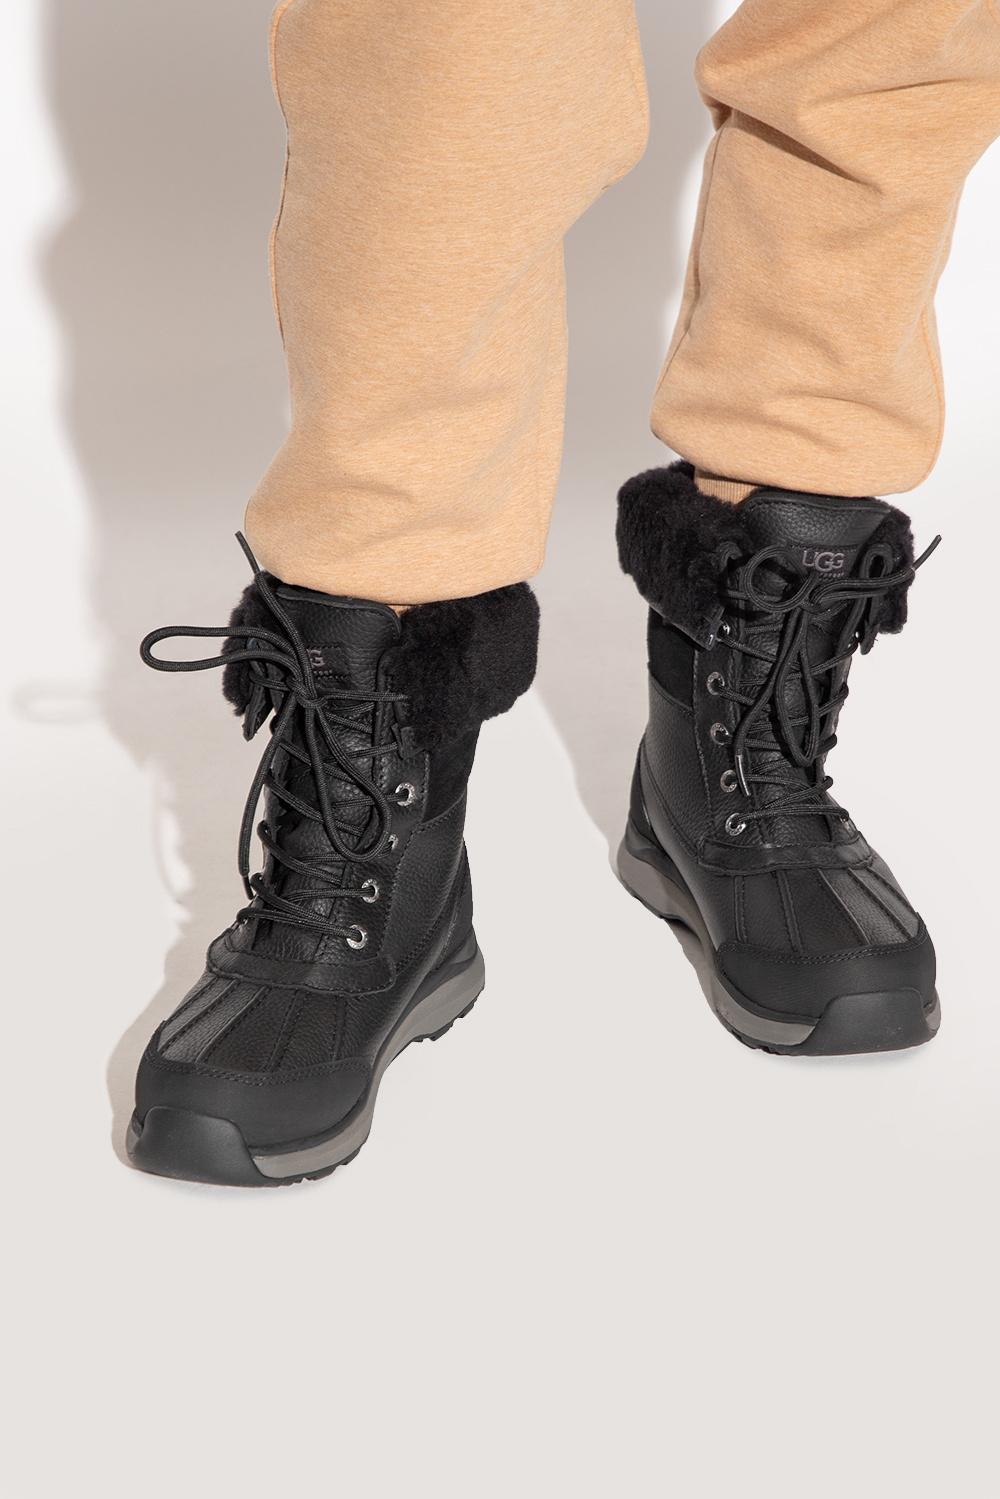 UGG 'adirondack Iii' Snow Boots in Black | Lyst